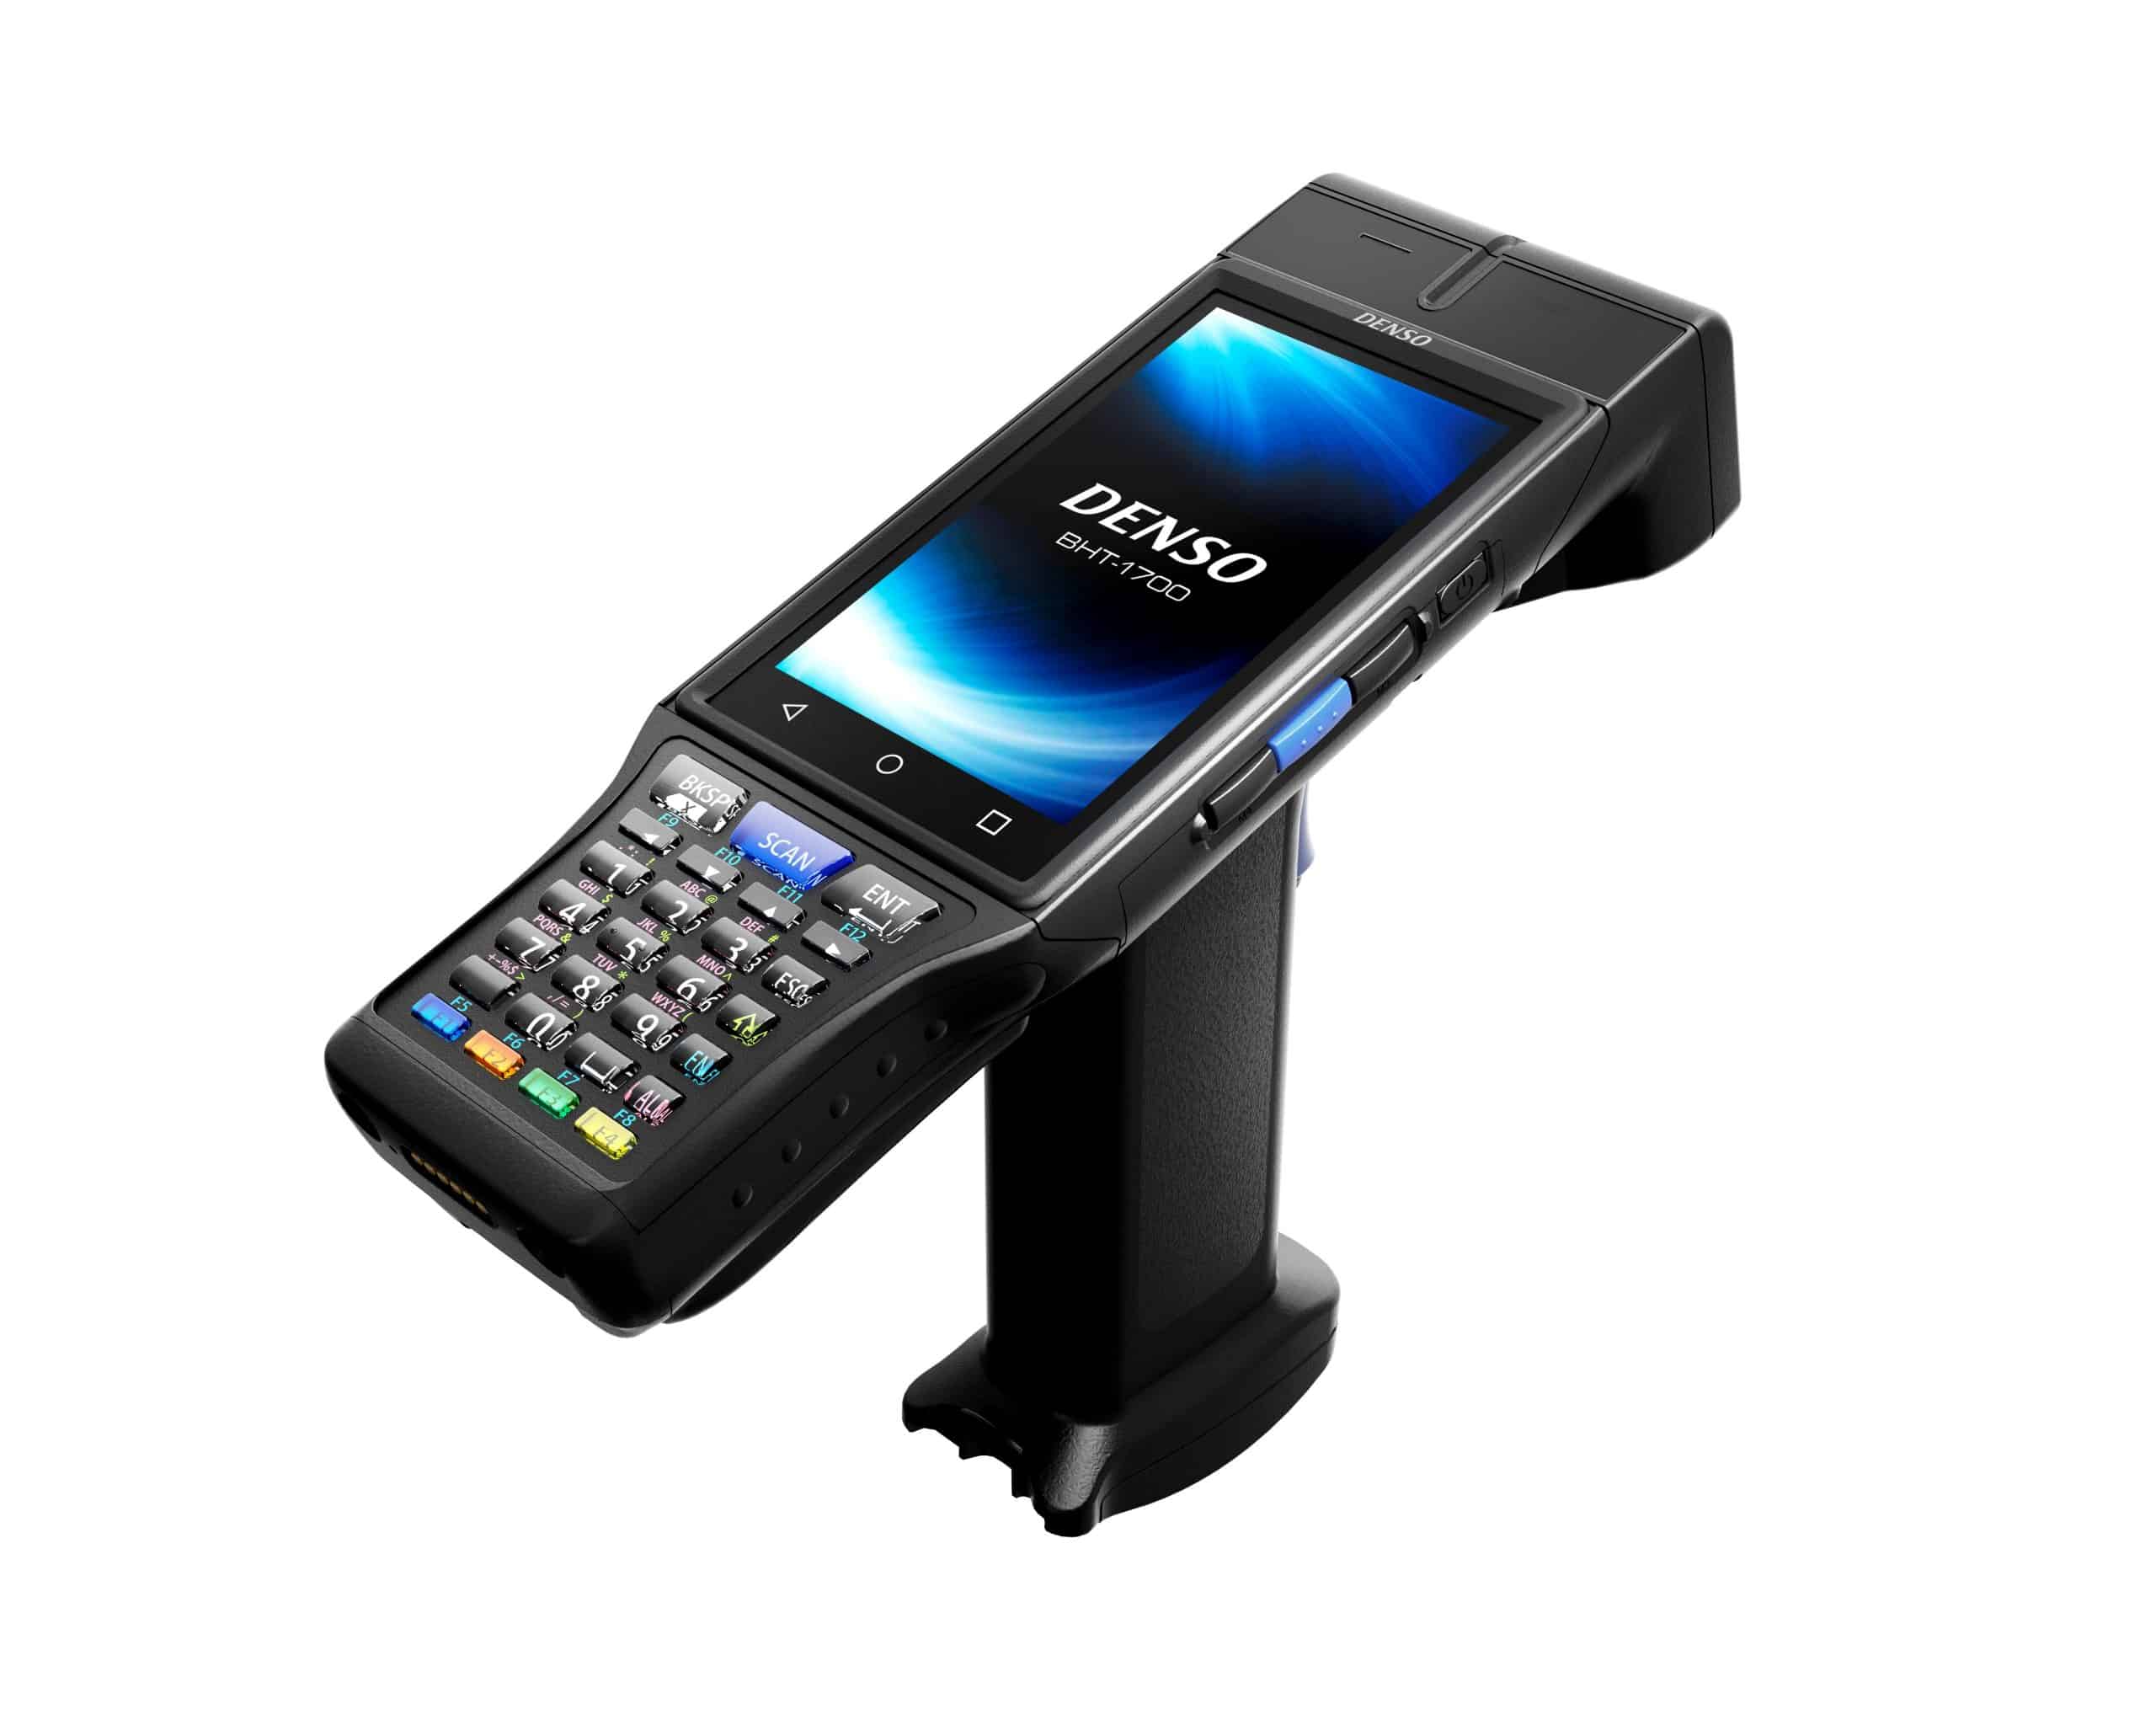 denso bht-1700q handheld barcode scanner side view